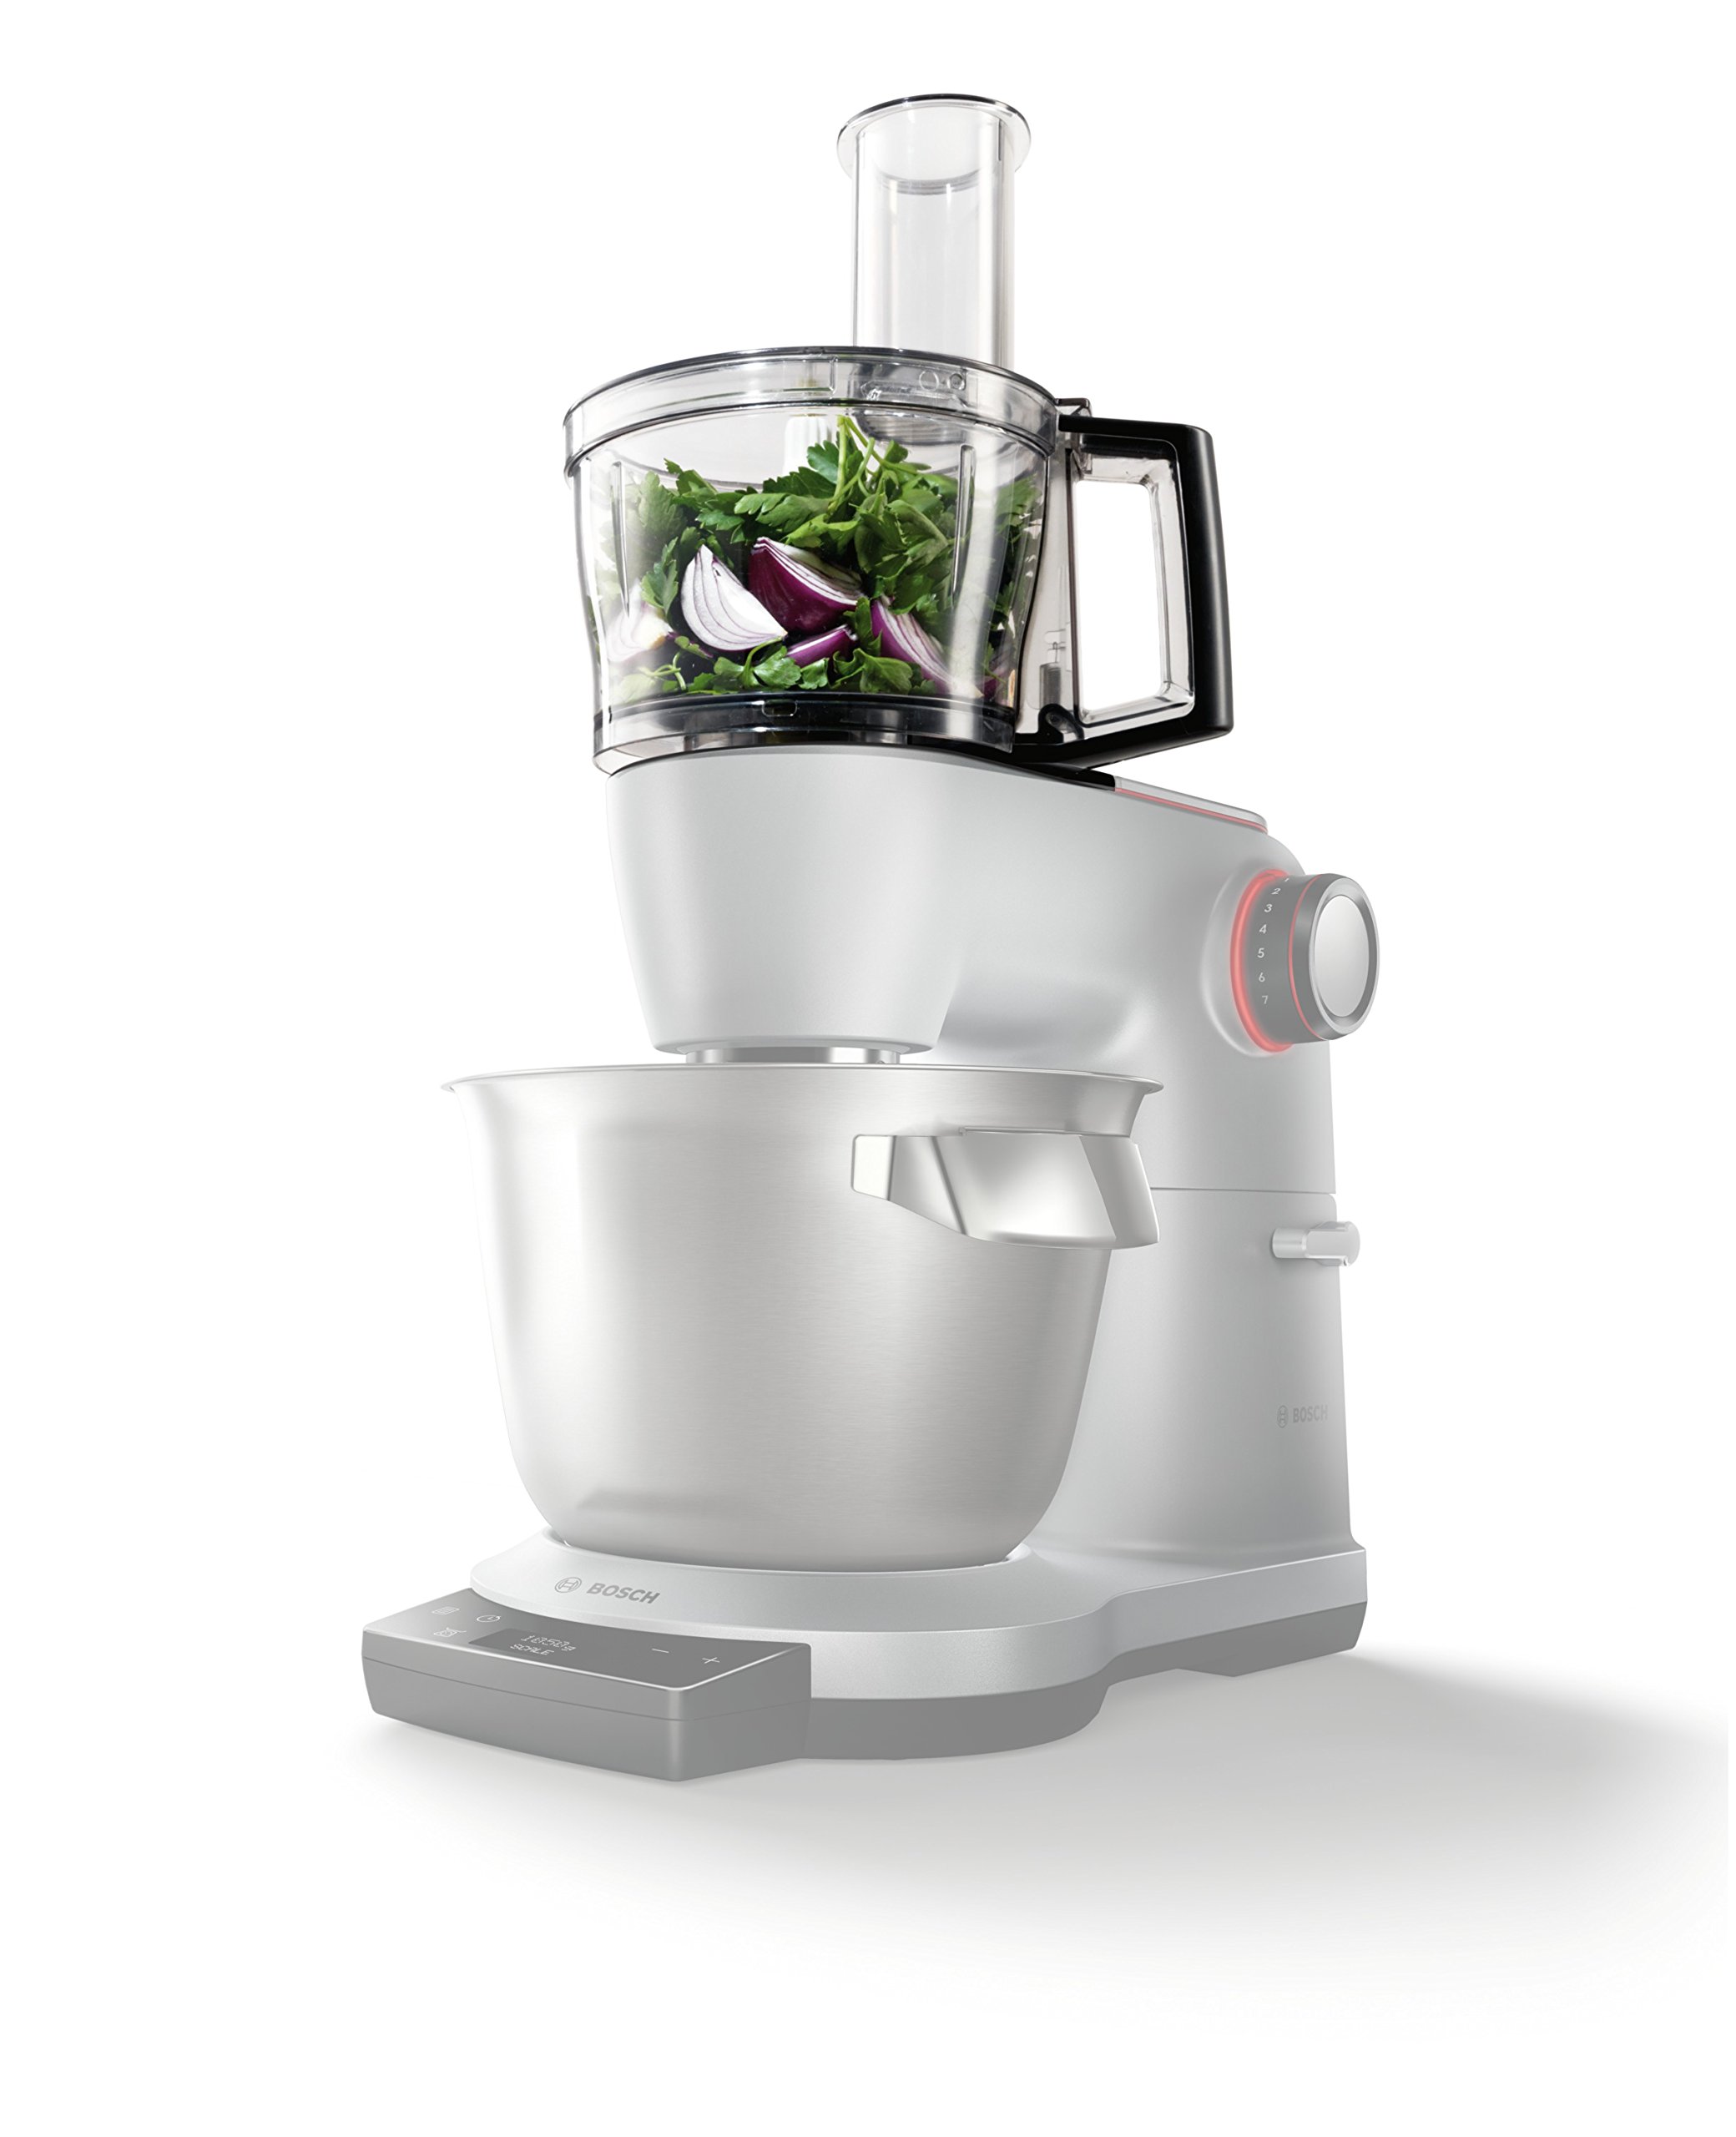 Bosch  Lifestyle Set Veggie Love Plus for Food Processors OptiMUM